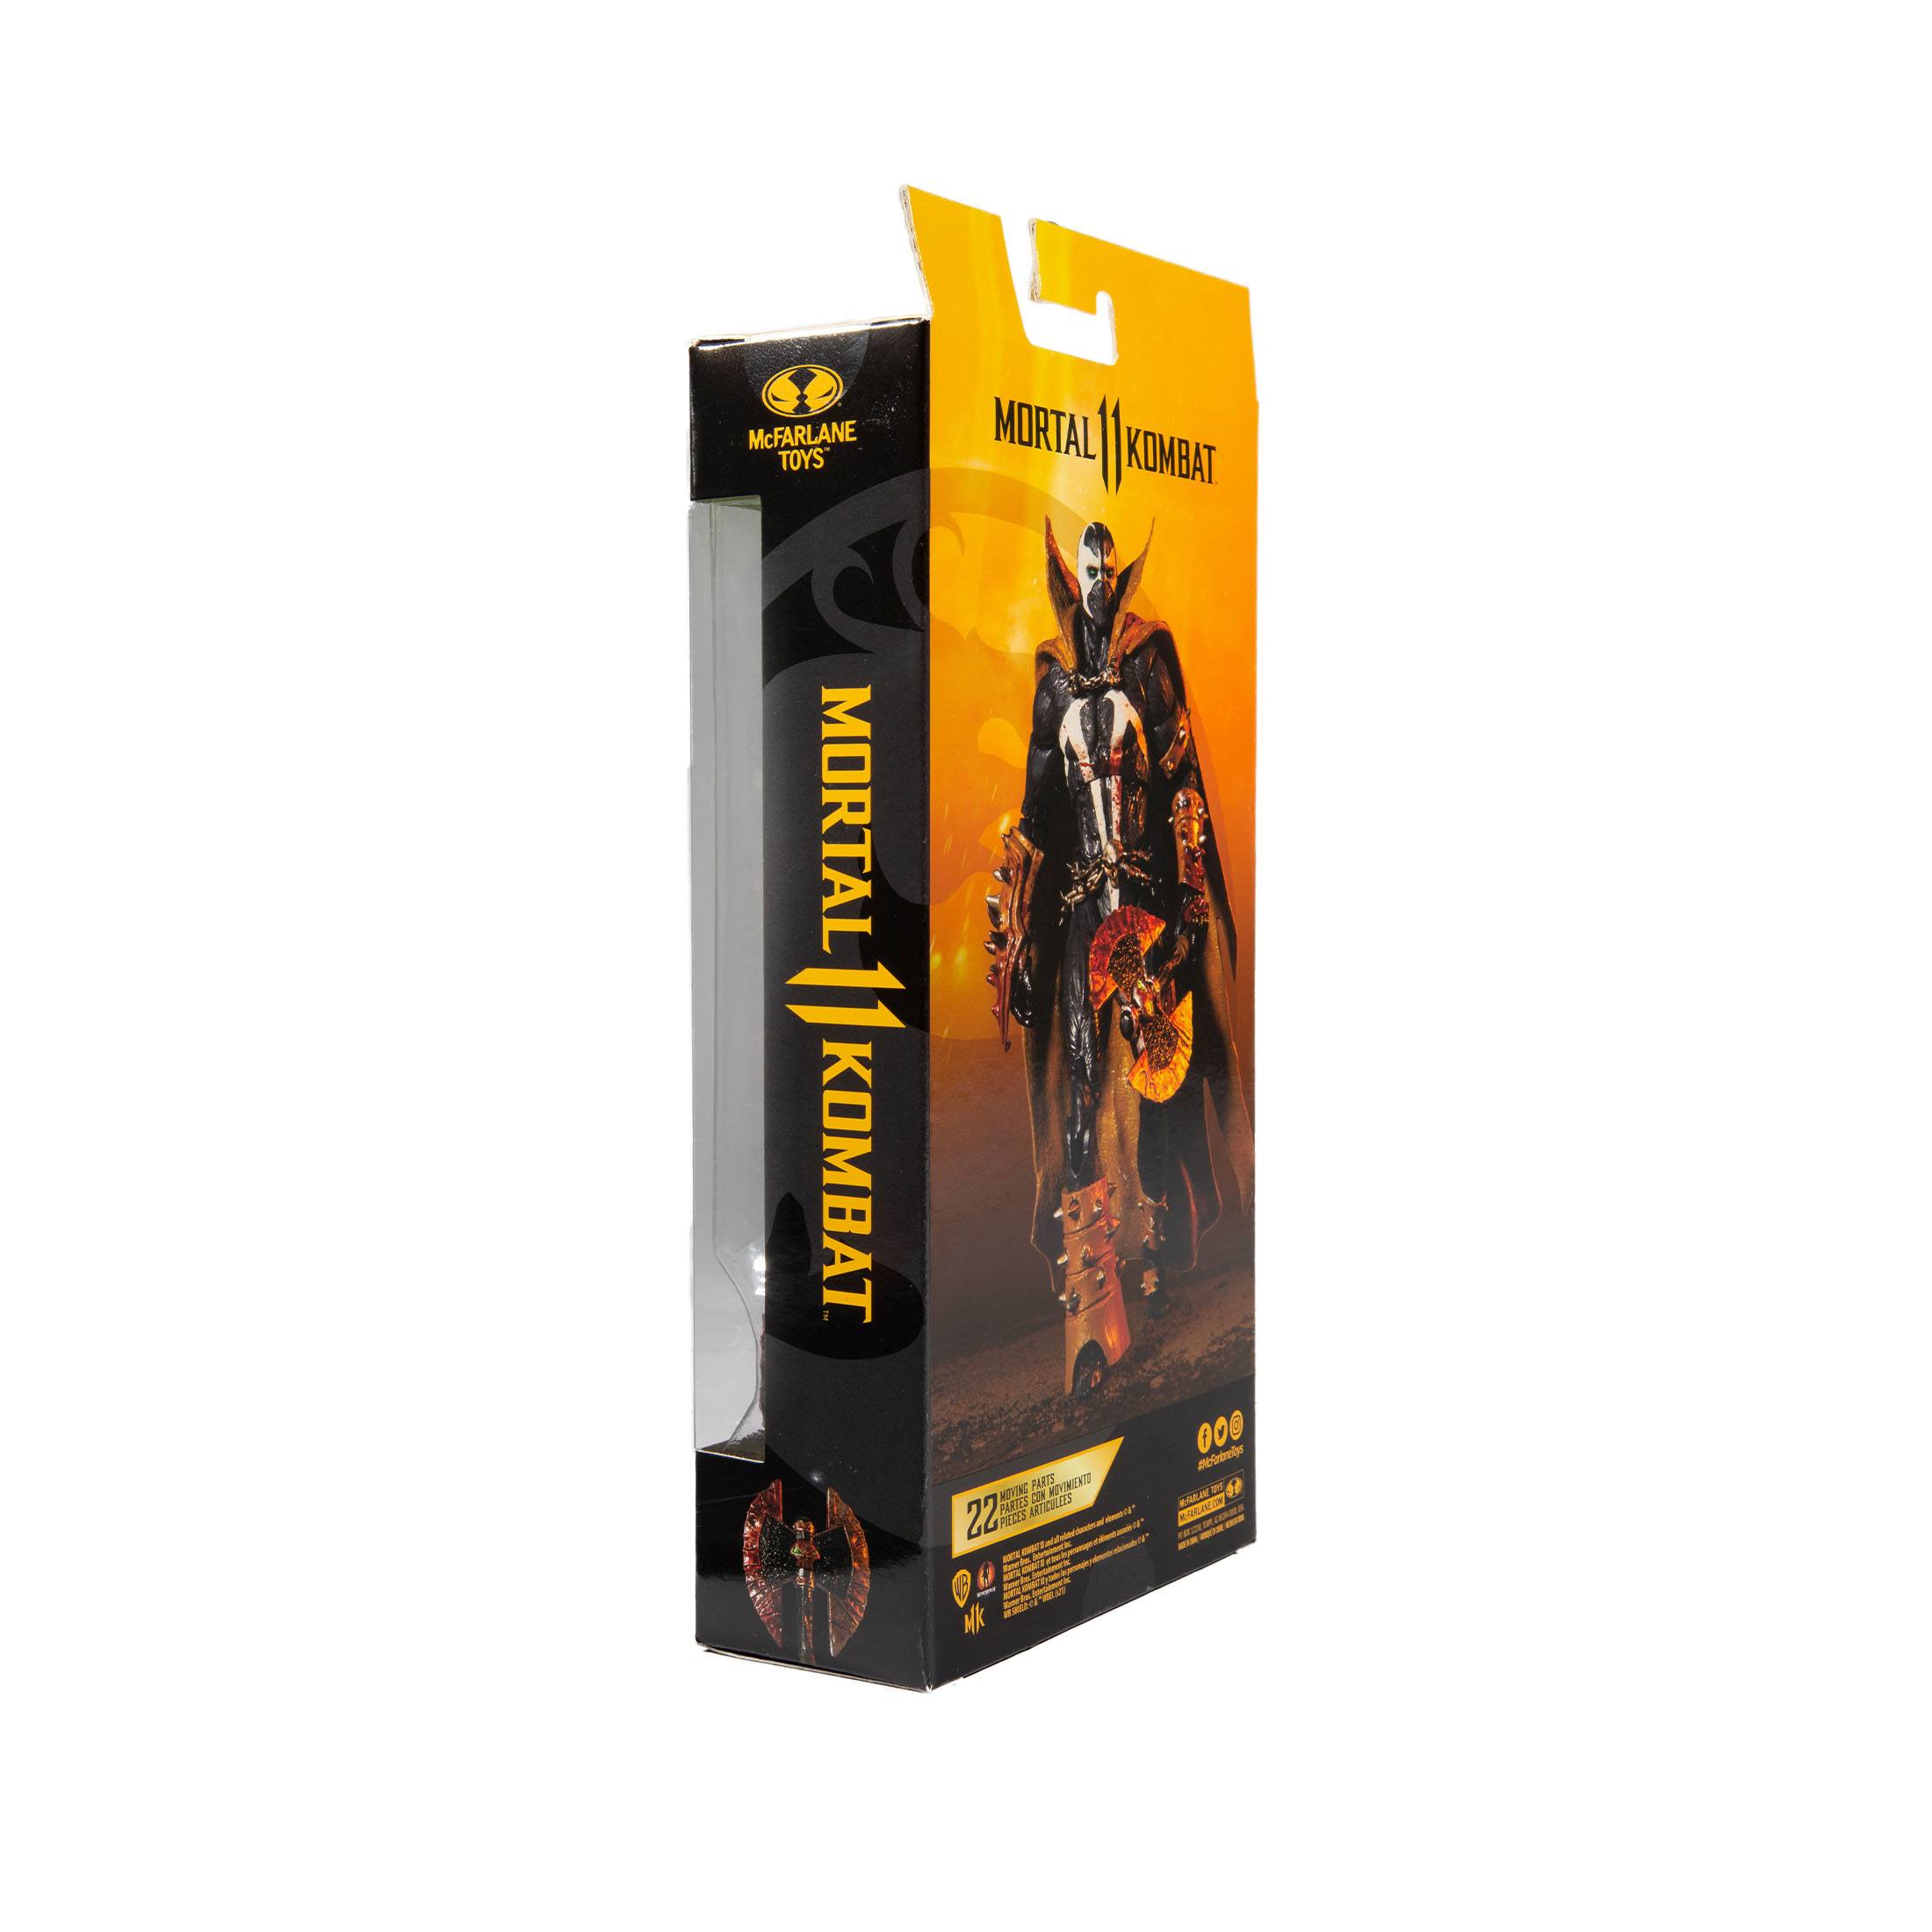 Mortal Kombat 11 Spawn Actionfigur Spawn (Bloody McFarlane Classic) 18 cm MCF11062 787926110623